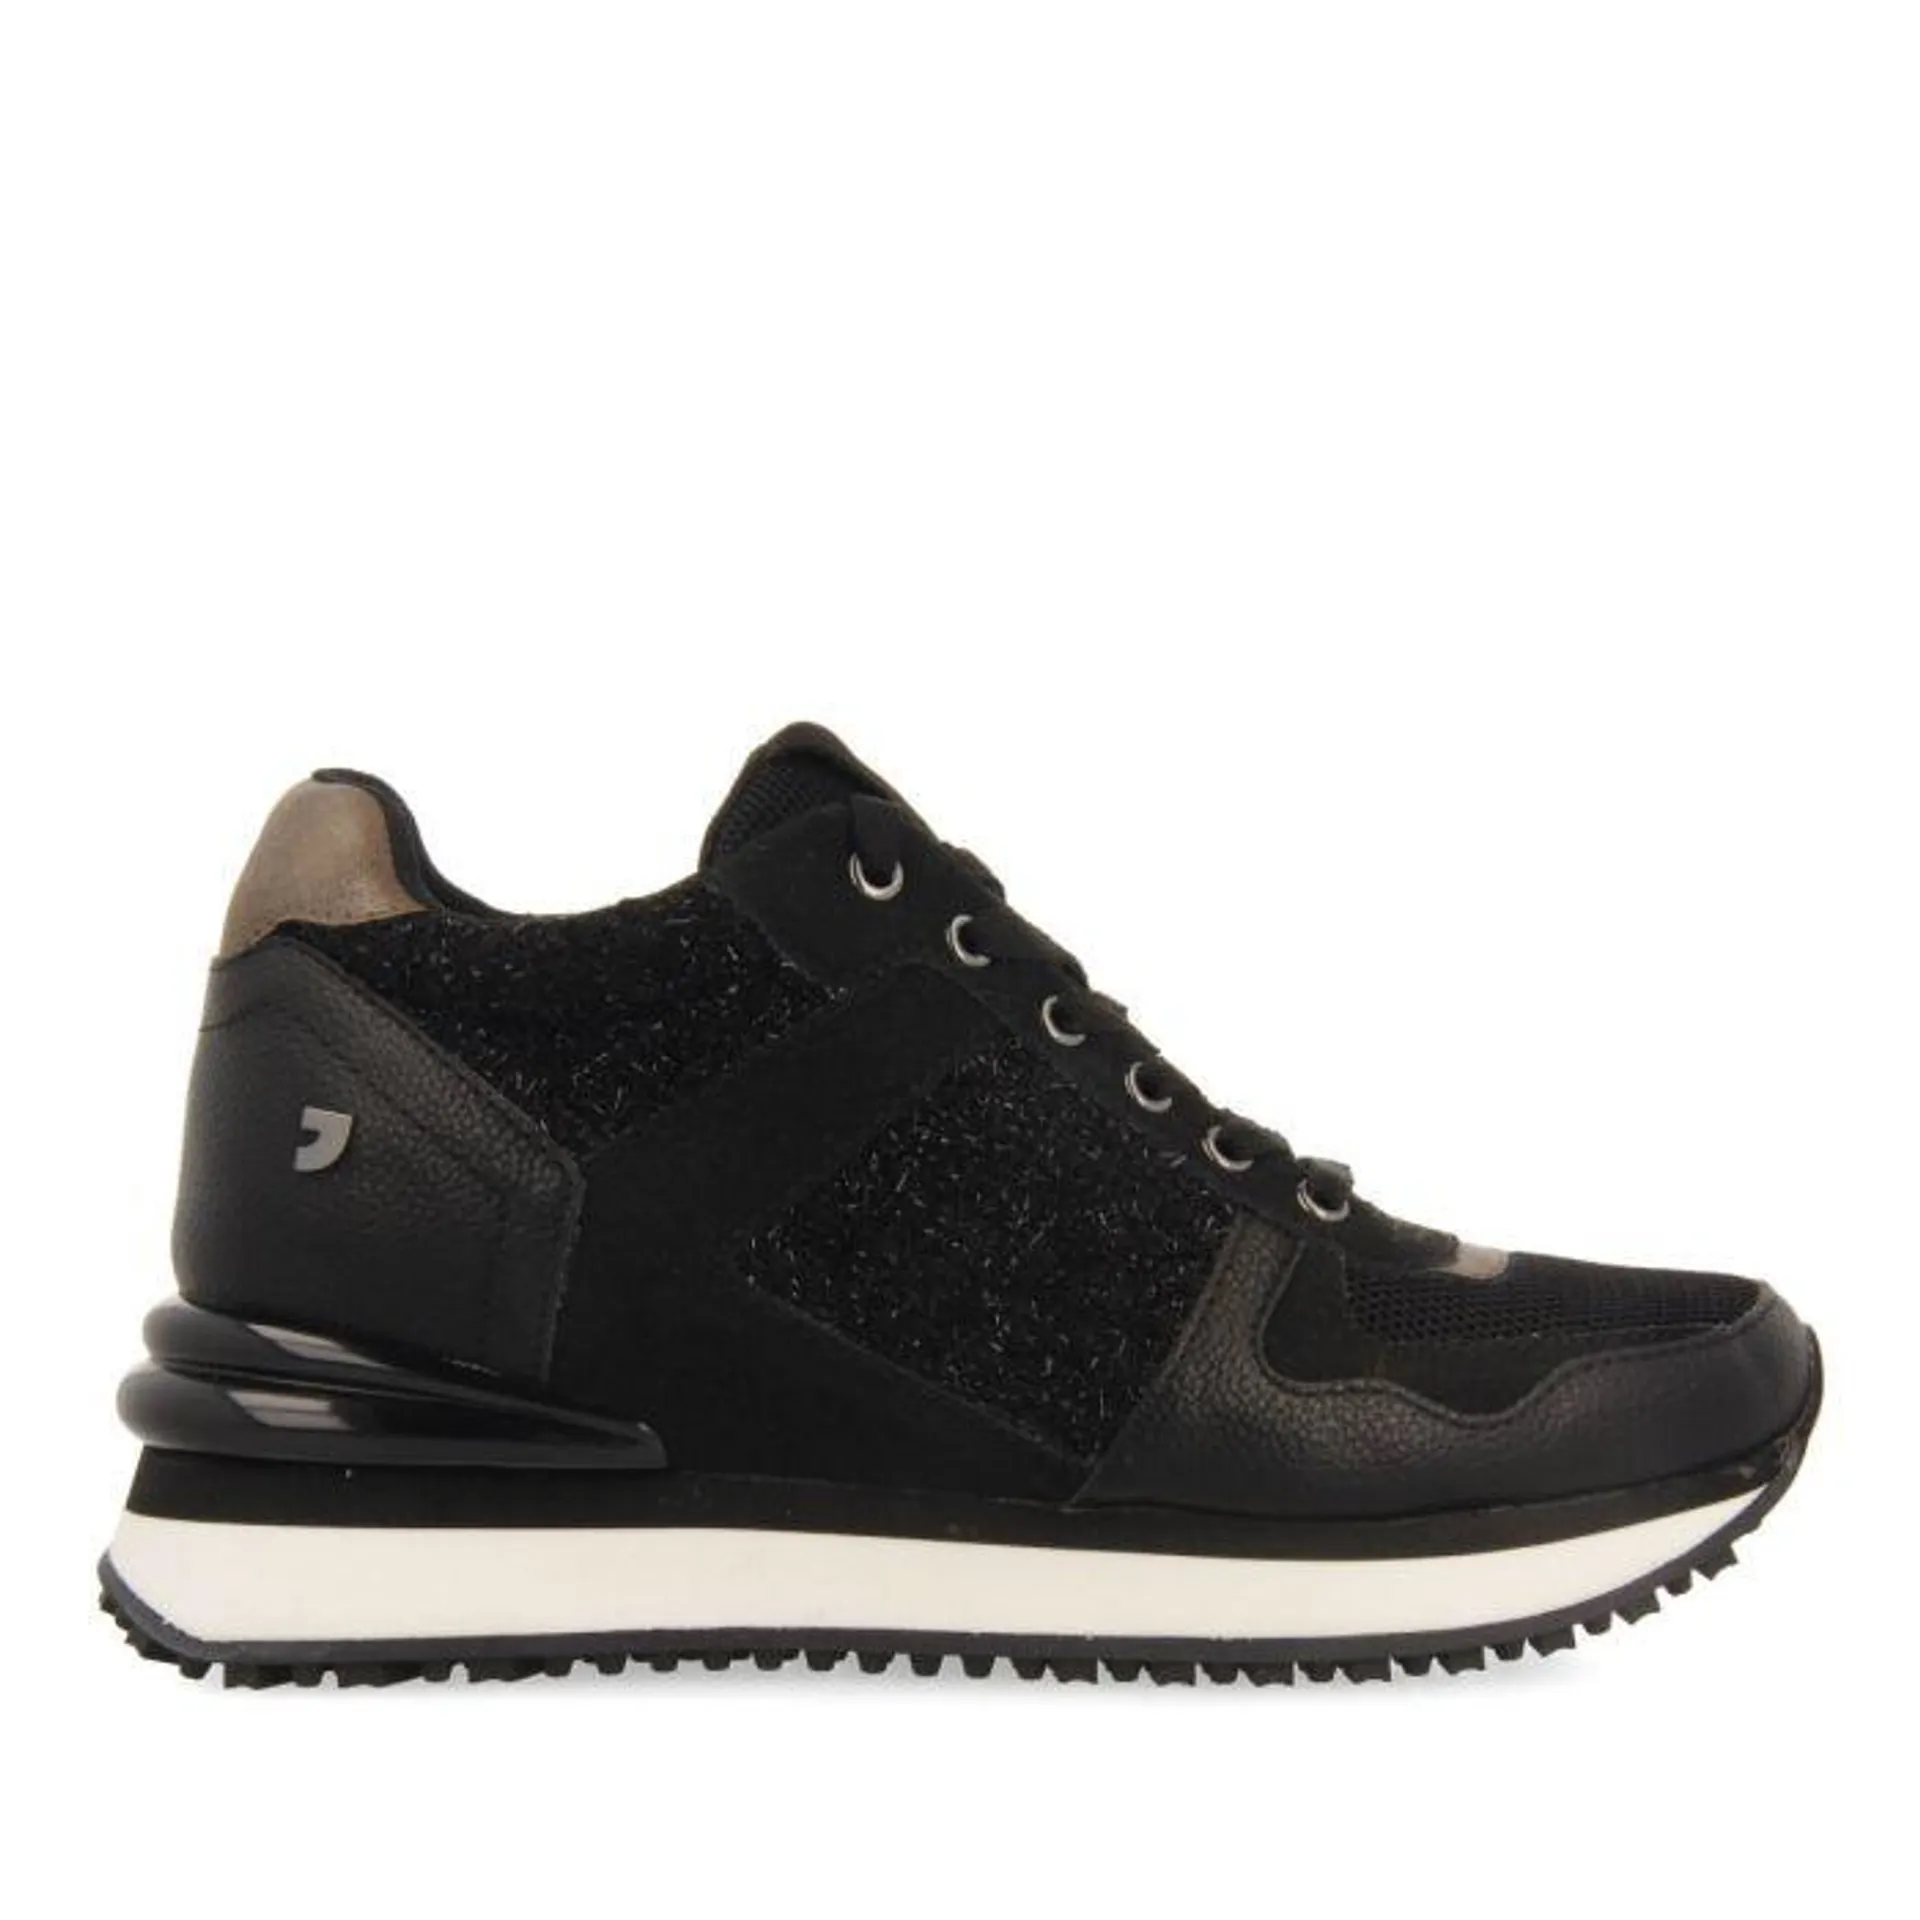 Lellig women's black monochrome sneakers with inner wedges